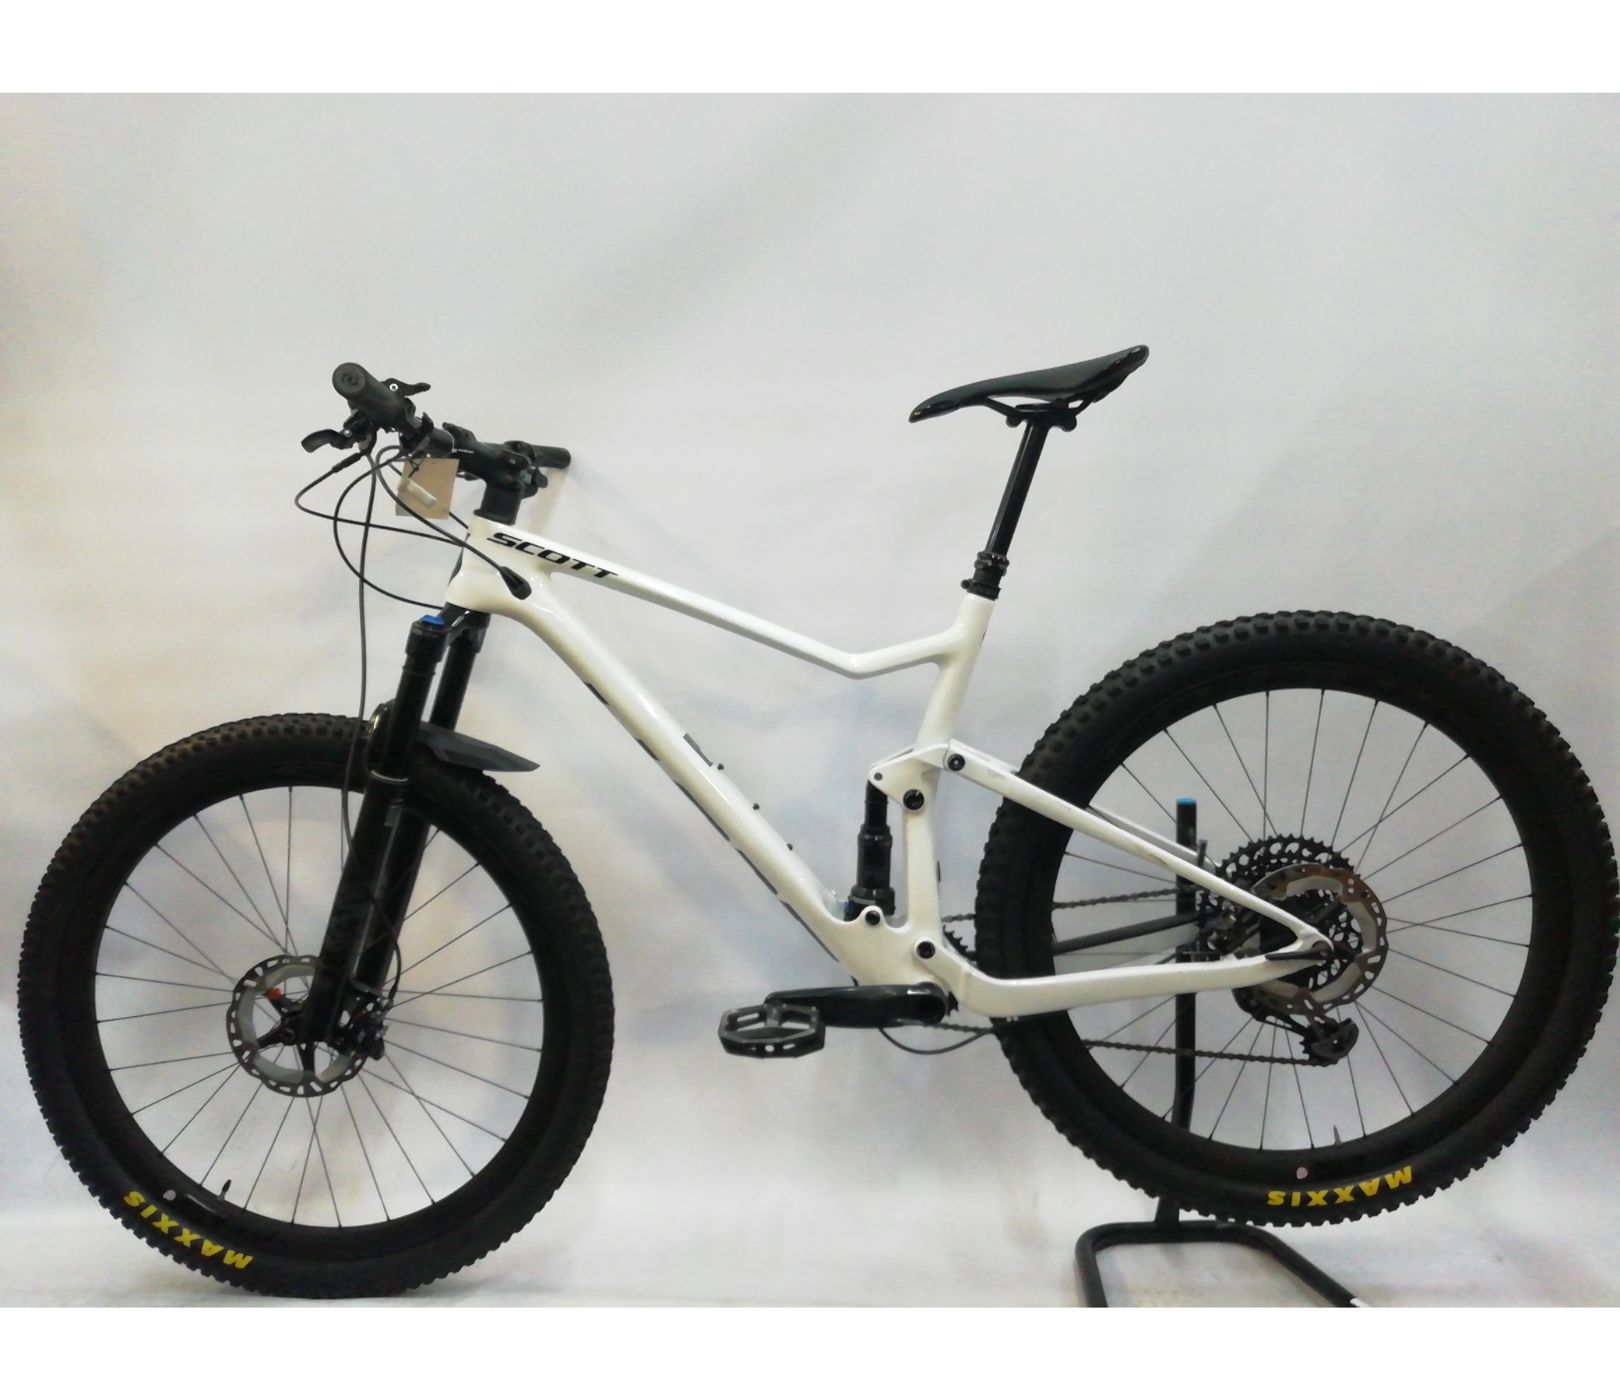 Pre-Owned Scott Spark  900 Pro Carbon Dual Suspension Mountain Bike - Large